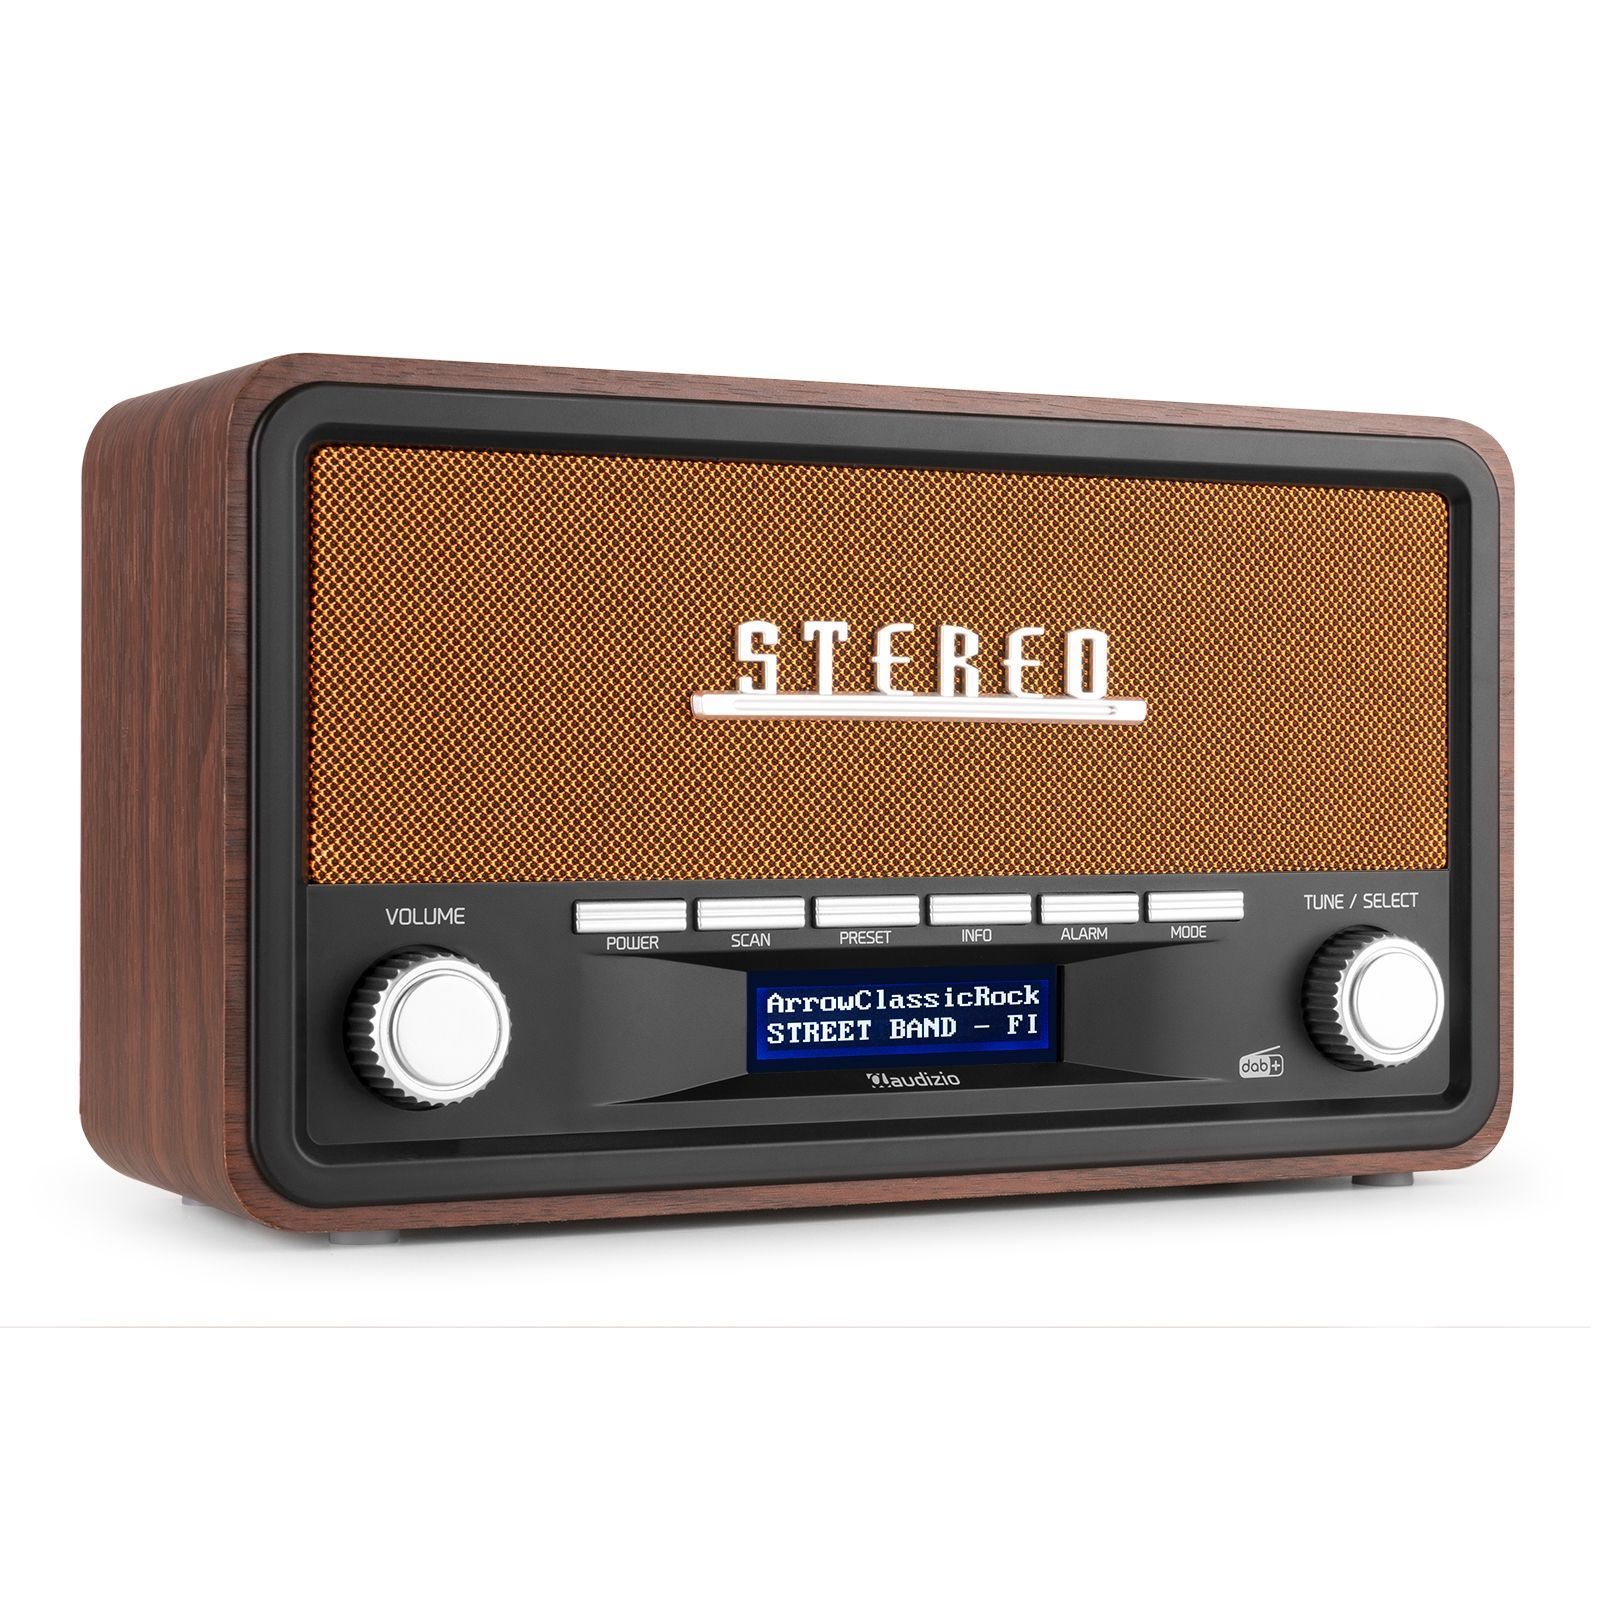 Audizio Foggia retro DAB+ radio med Bluetooth - Bärbar stereoradio med larm - 50W Peak effekt 